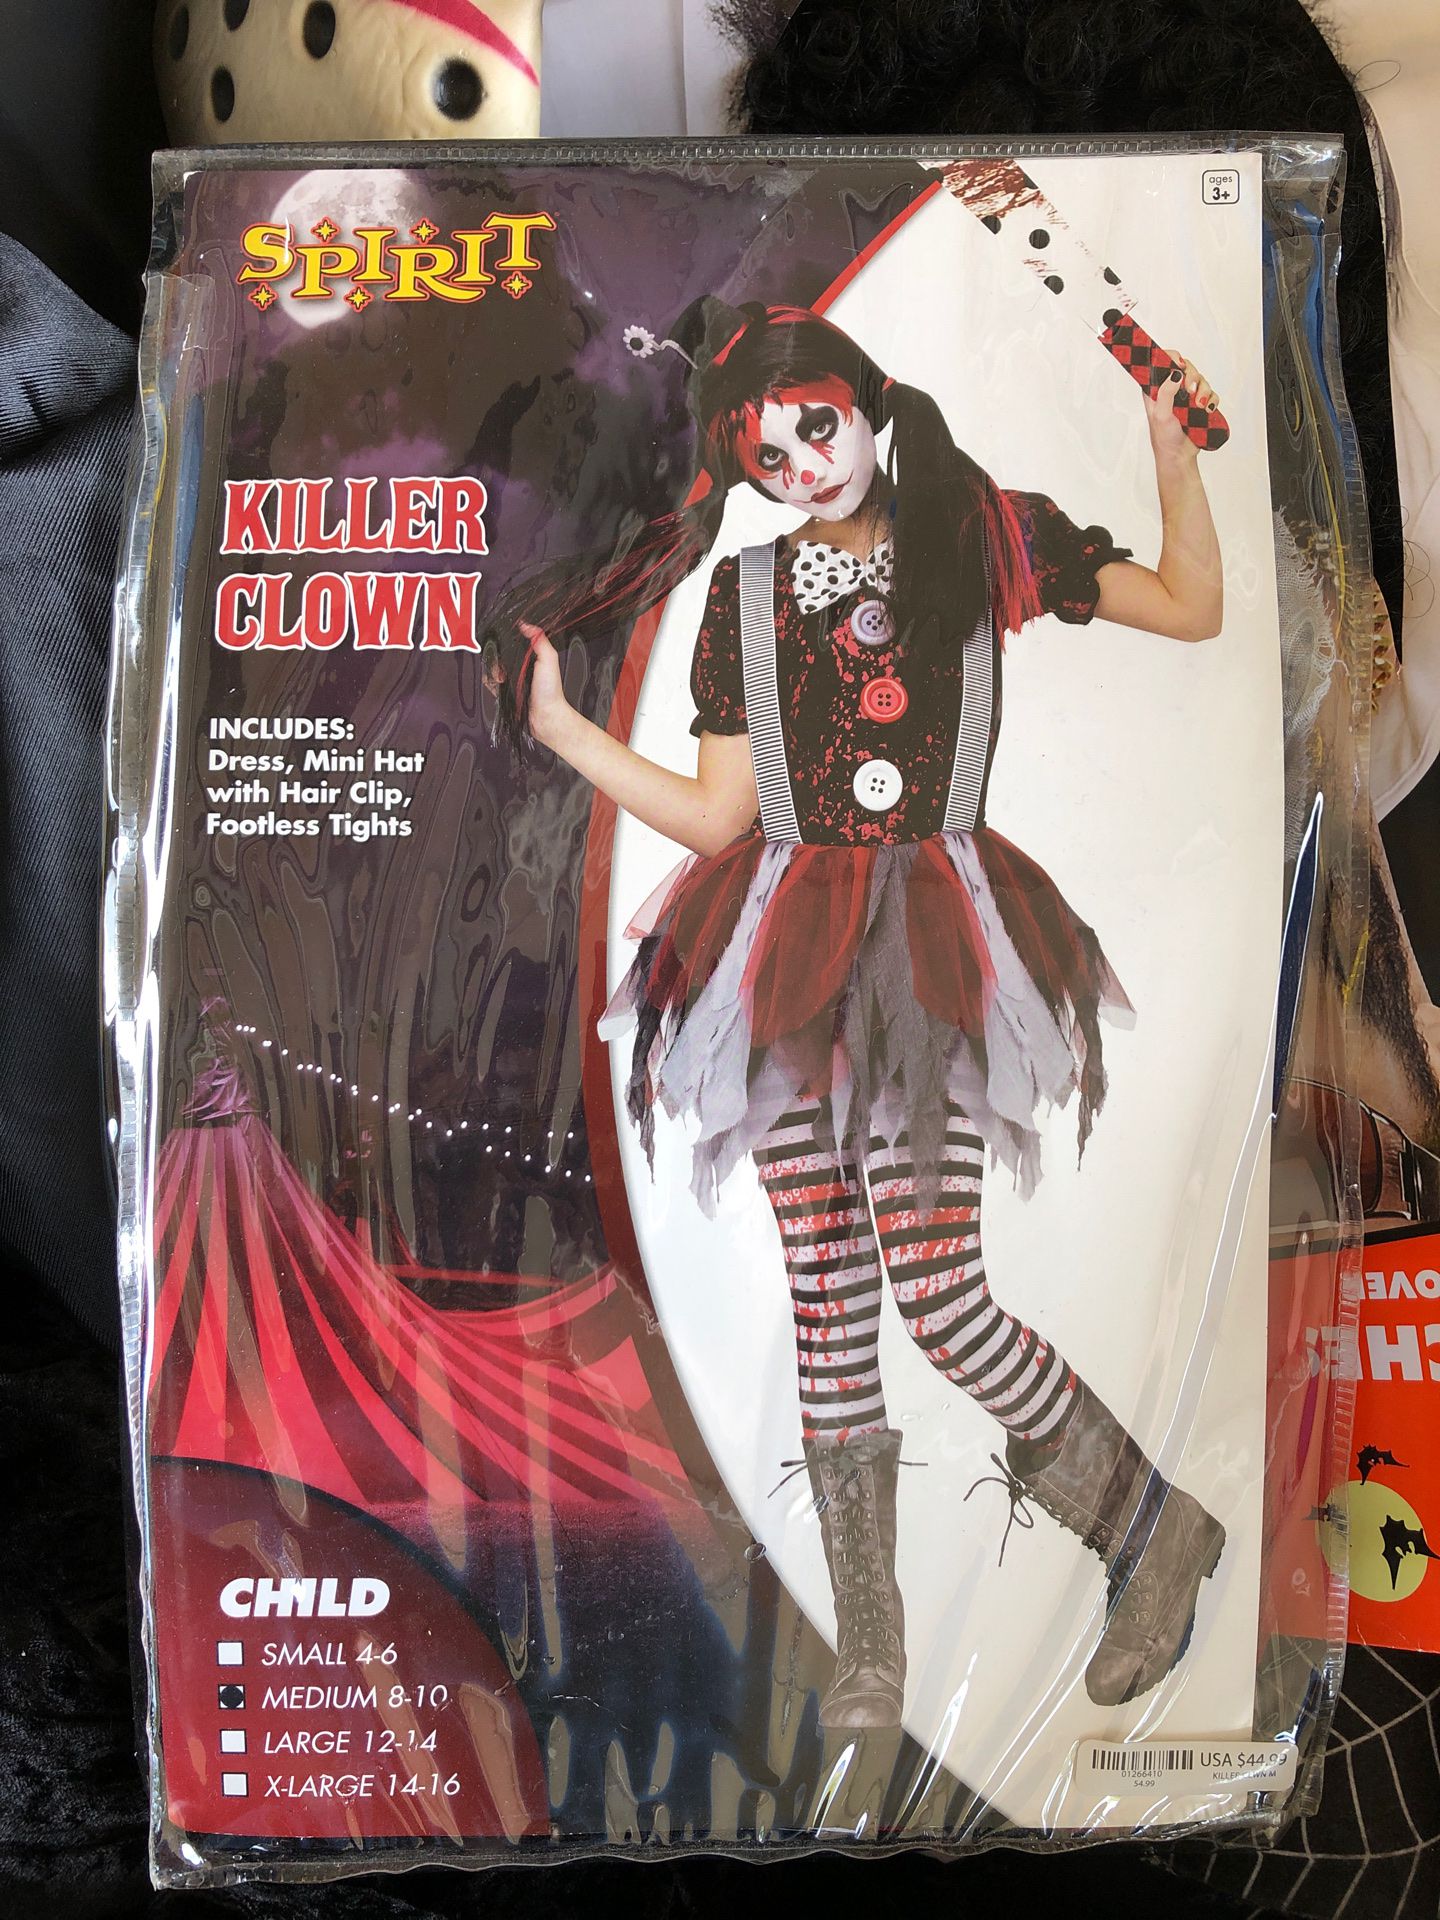 Killer clown Halloween costume